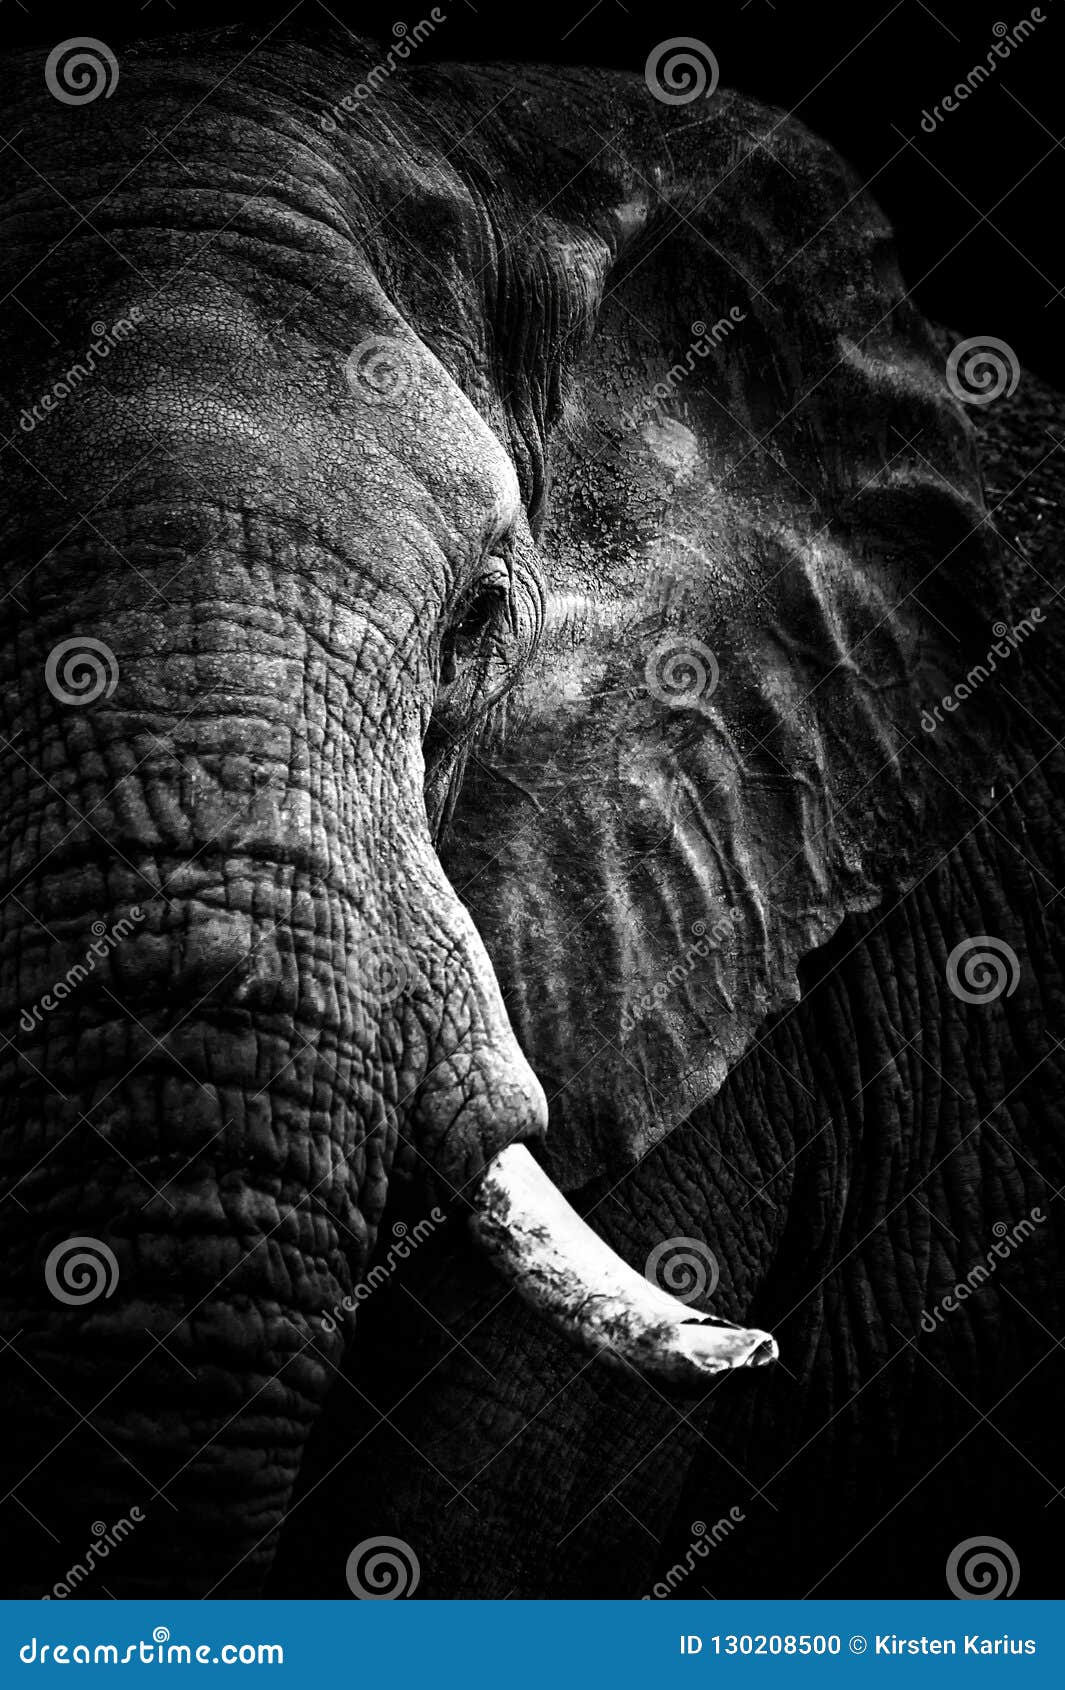 african elephant portrait monochrome